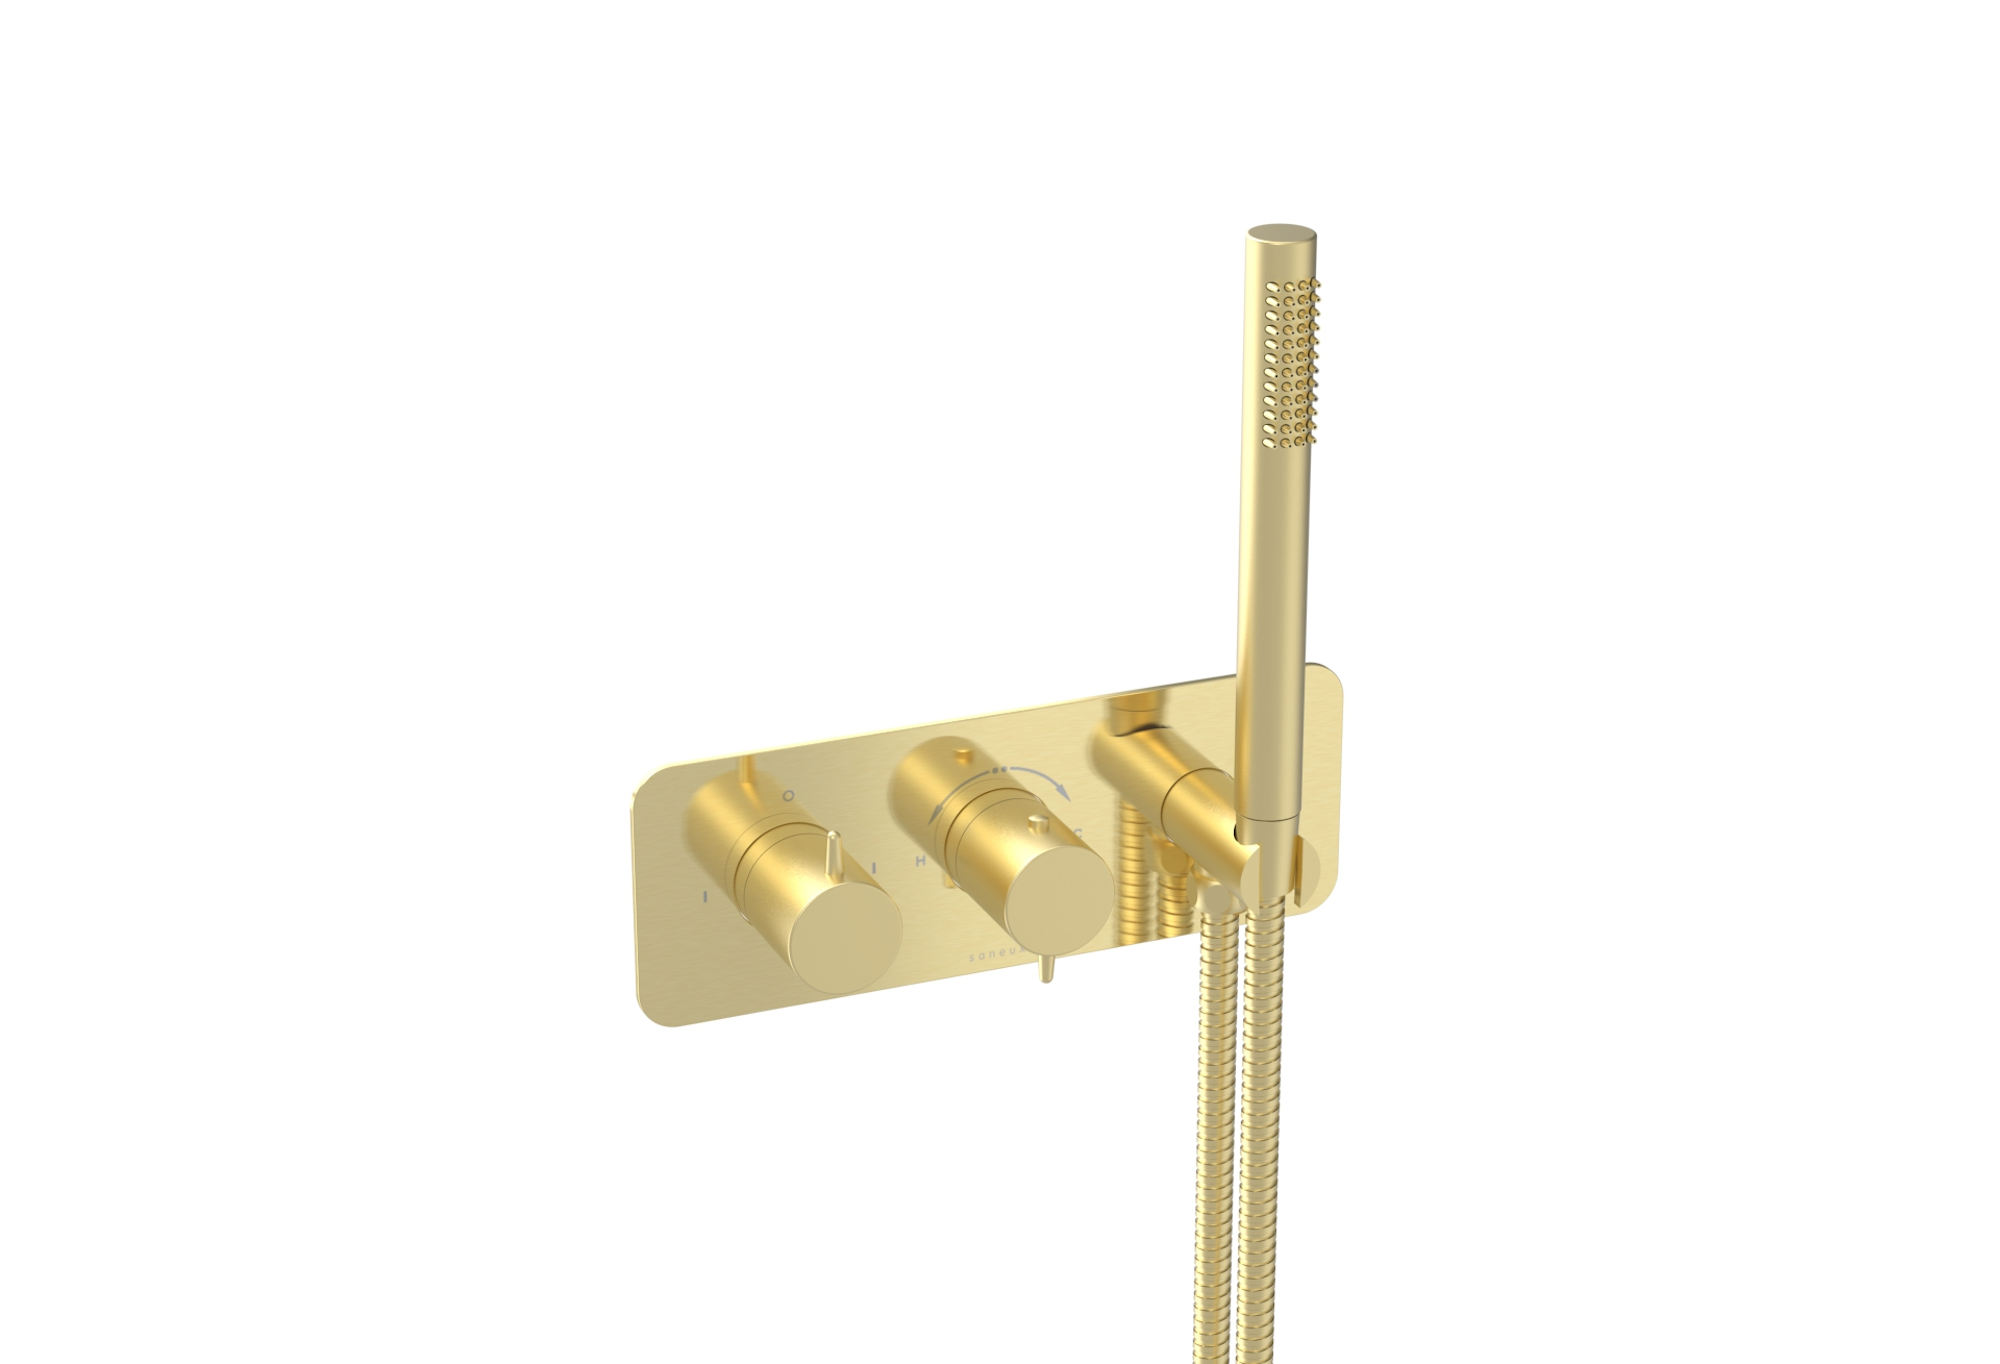 EDEN 2 way thermostatic shower valve kit in landscape with handspray - Brushed Brass